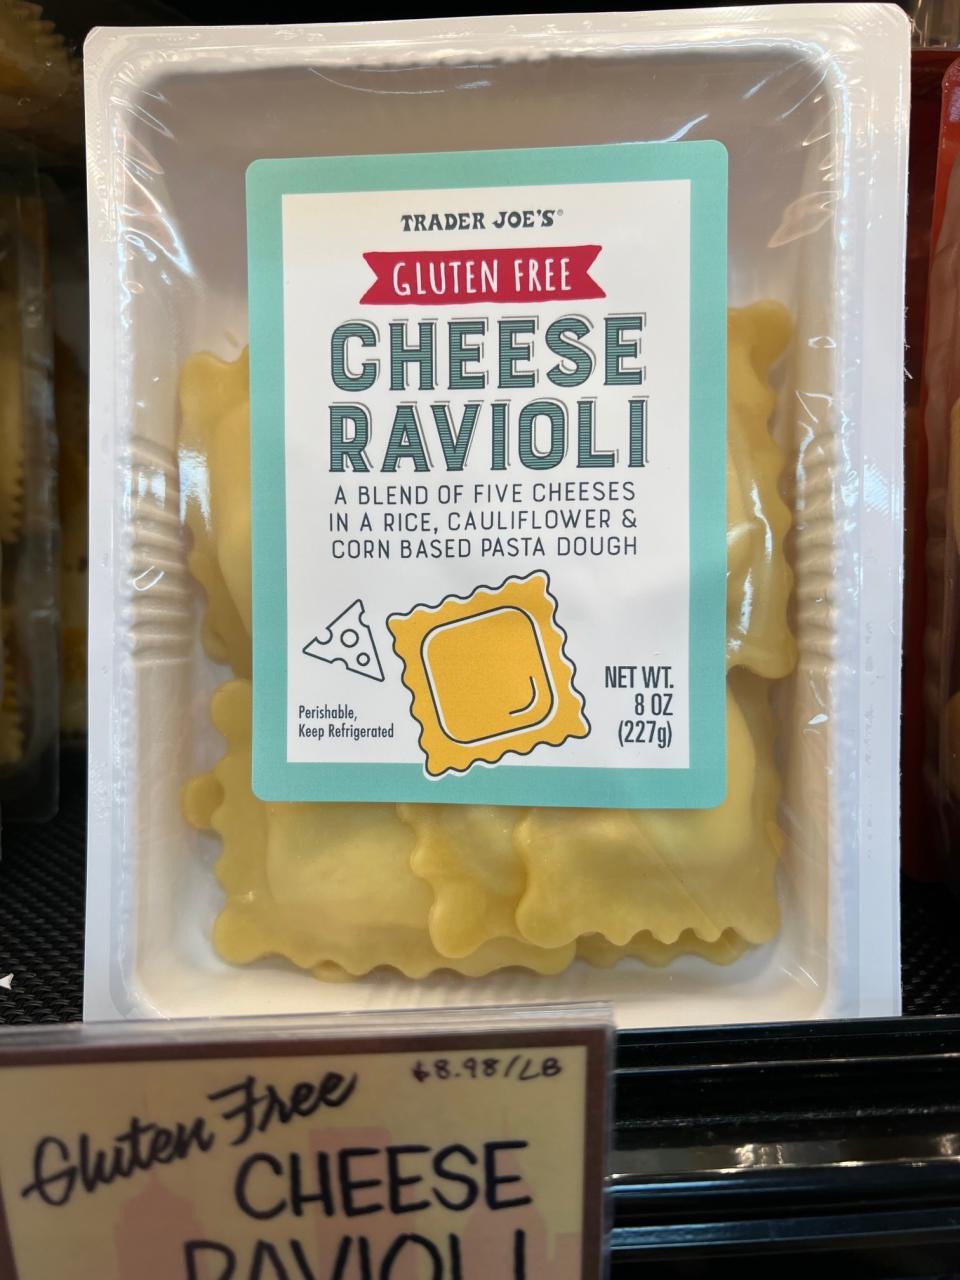 Gluten-free Cheese Ravioli